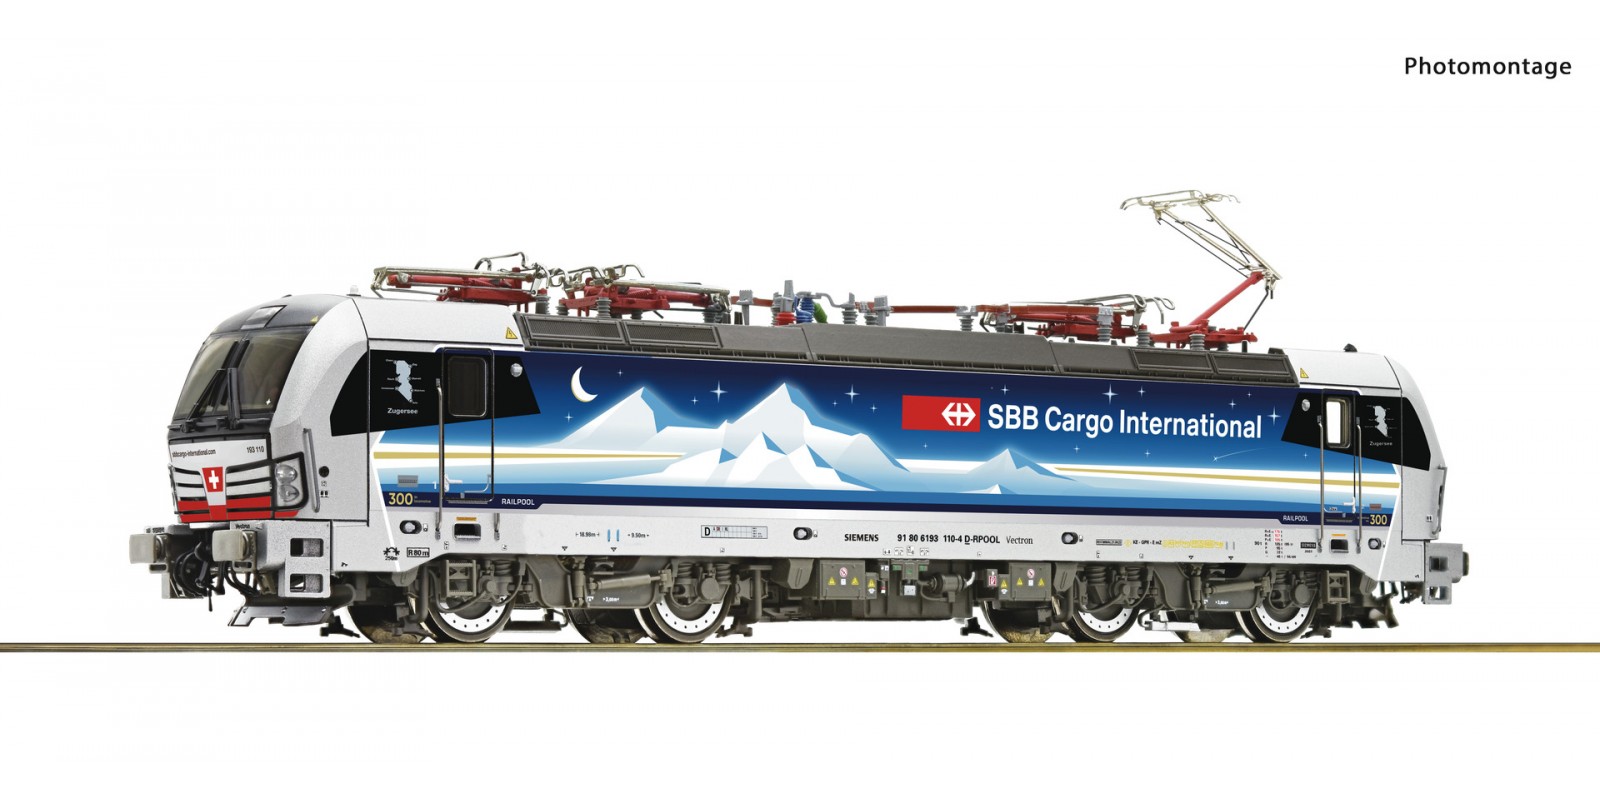 RO7510038 Electric locomotive 193 1 10-4  Goldpiercer , SBB C